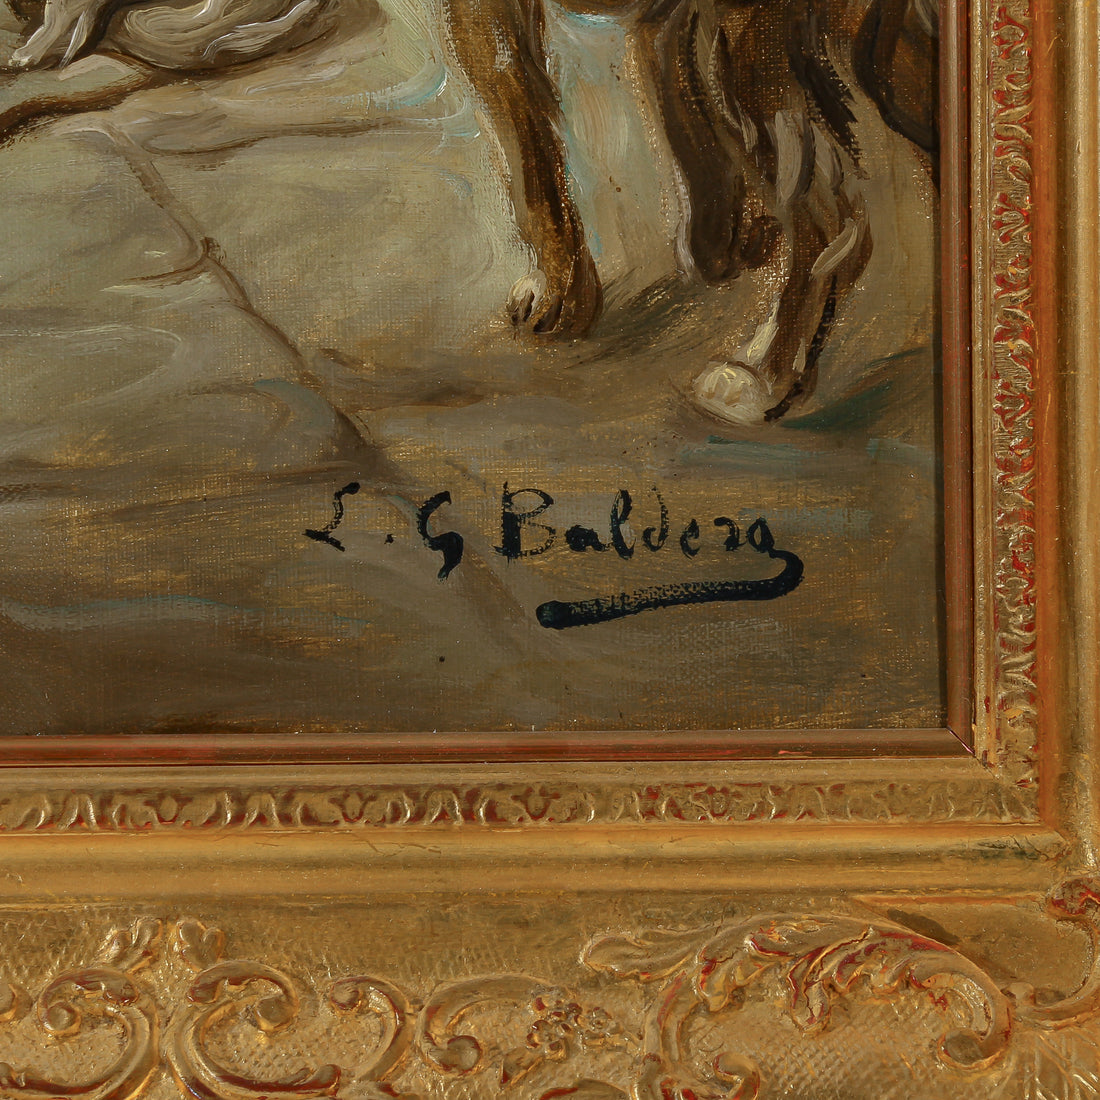 Luigi G. Baldero - Tavern Scene with Trickster - Oil on Canvas